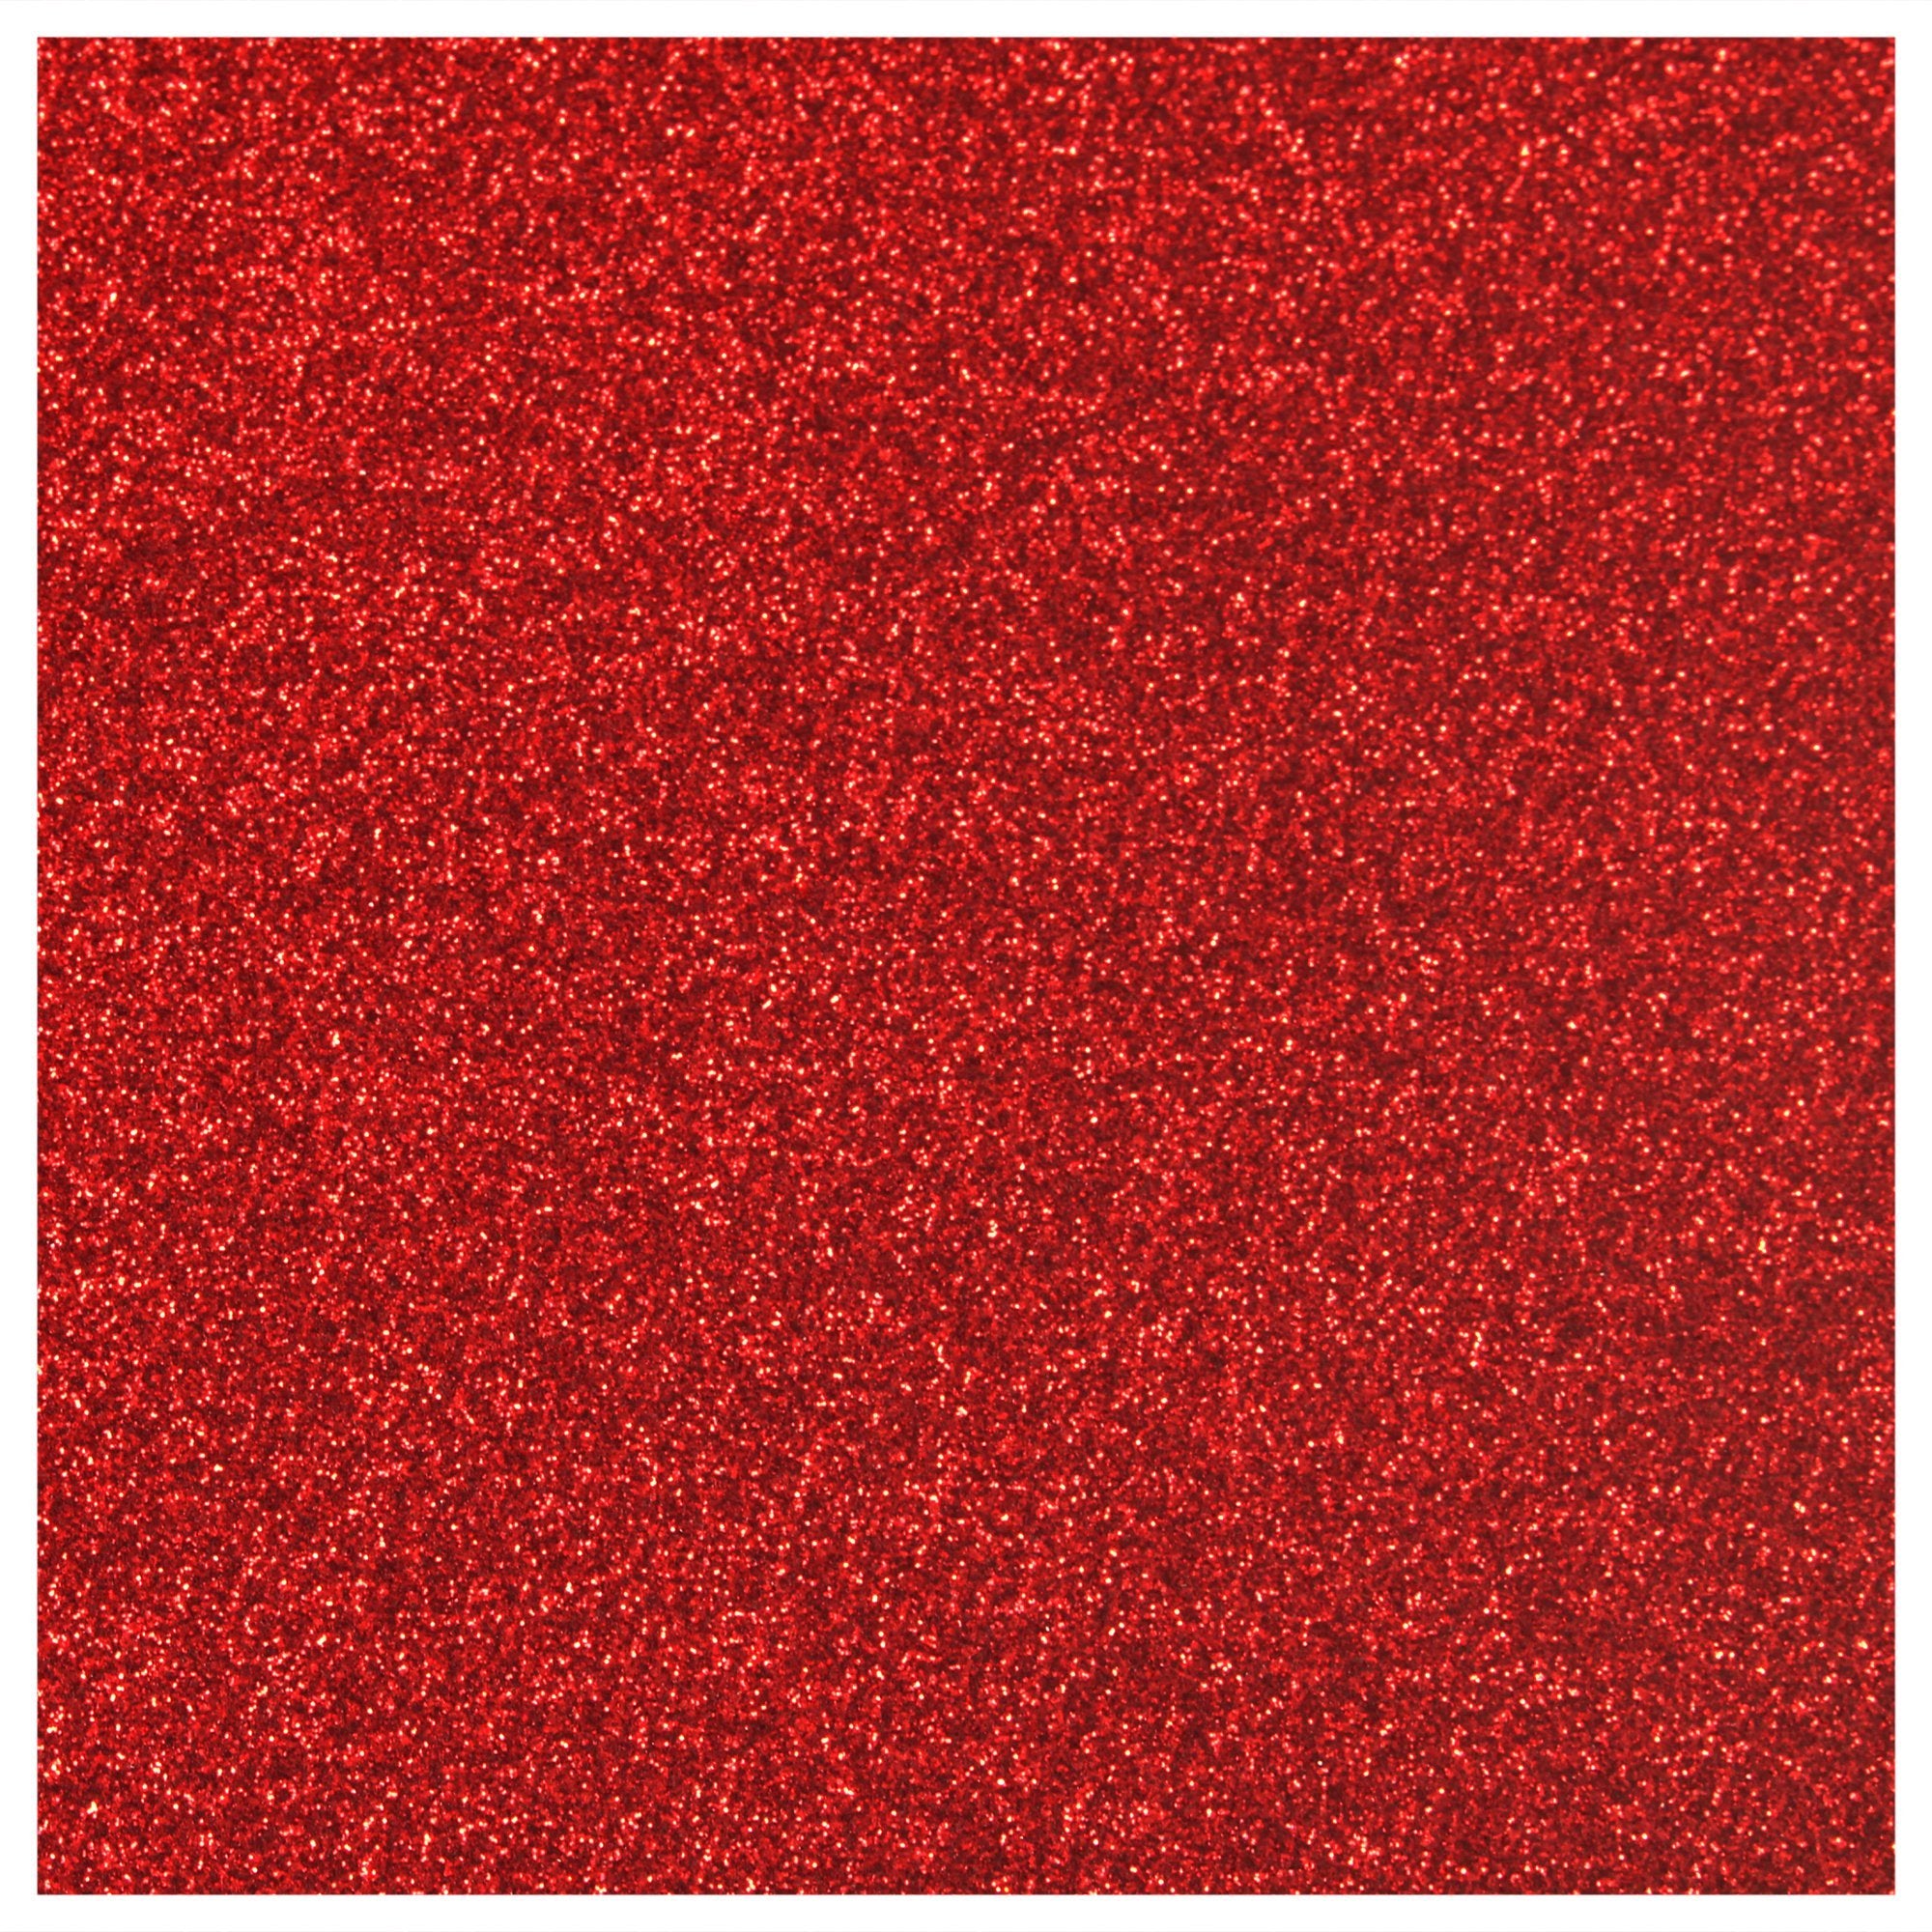 RED GLITTER HEAT TRANSFER VINYL Sheet 12x36 Red Nepal